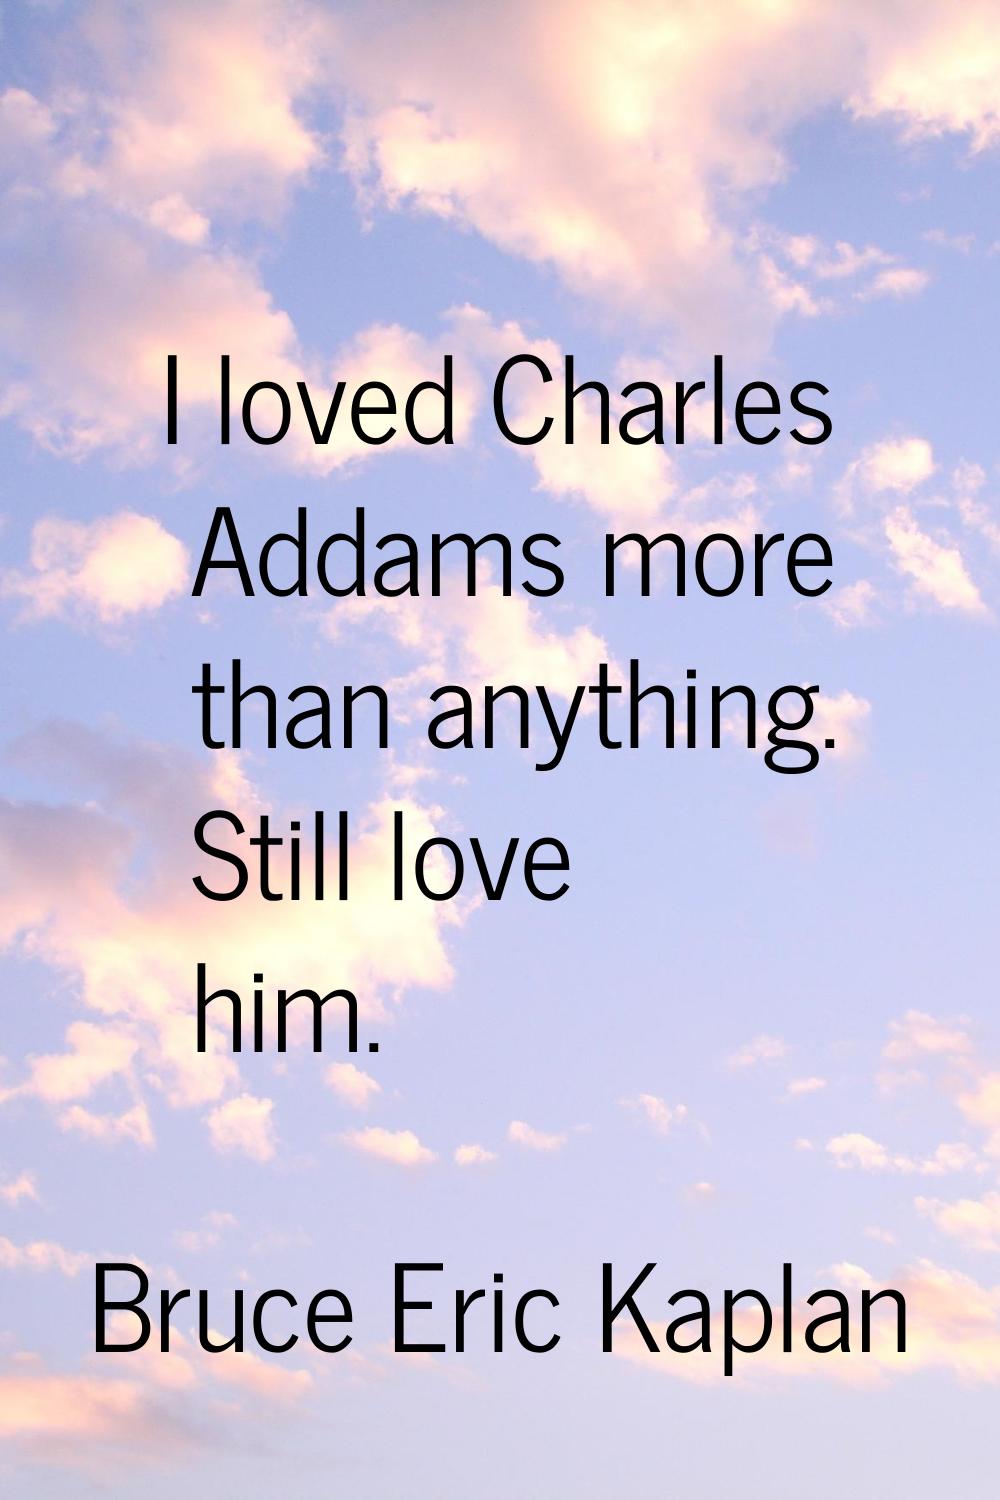 I loved Charles Addams more than anything. Still love him.